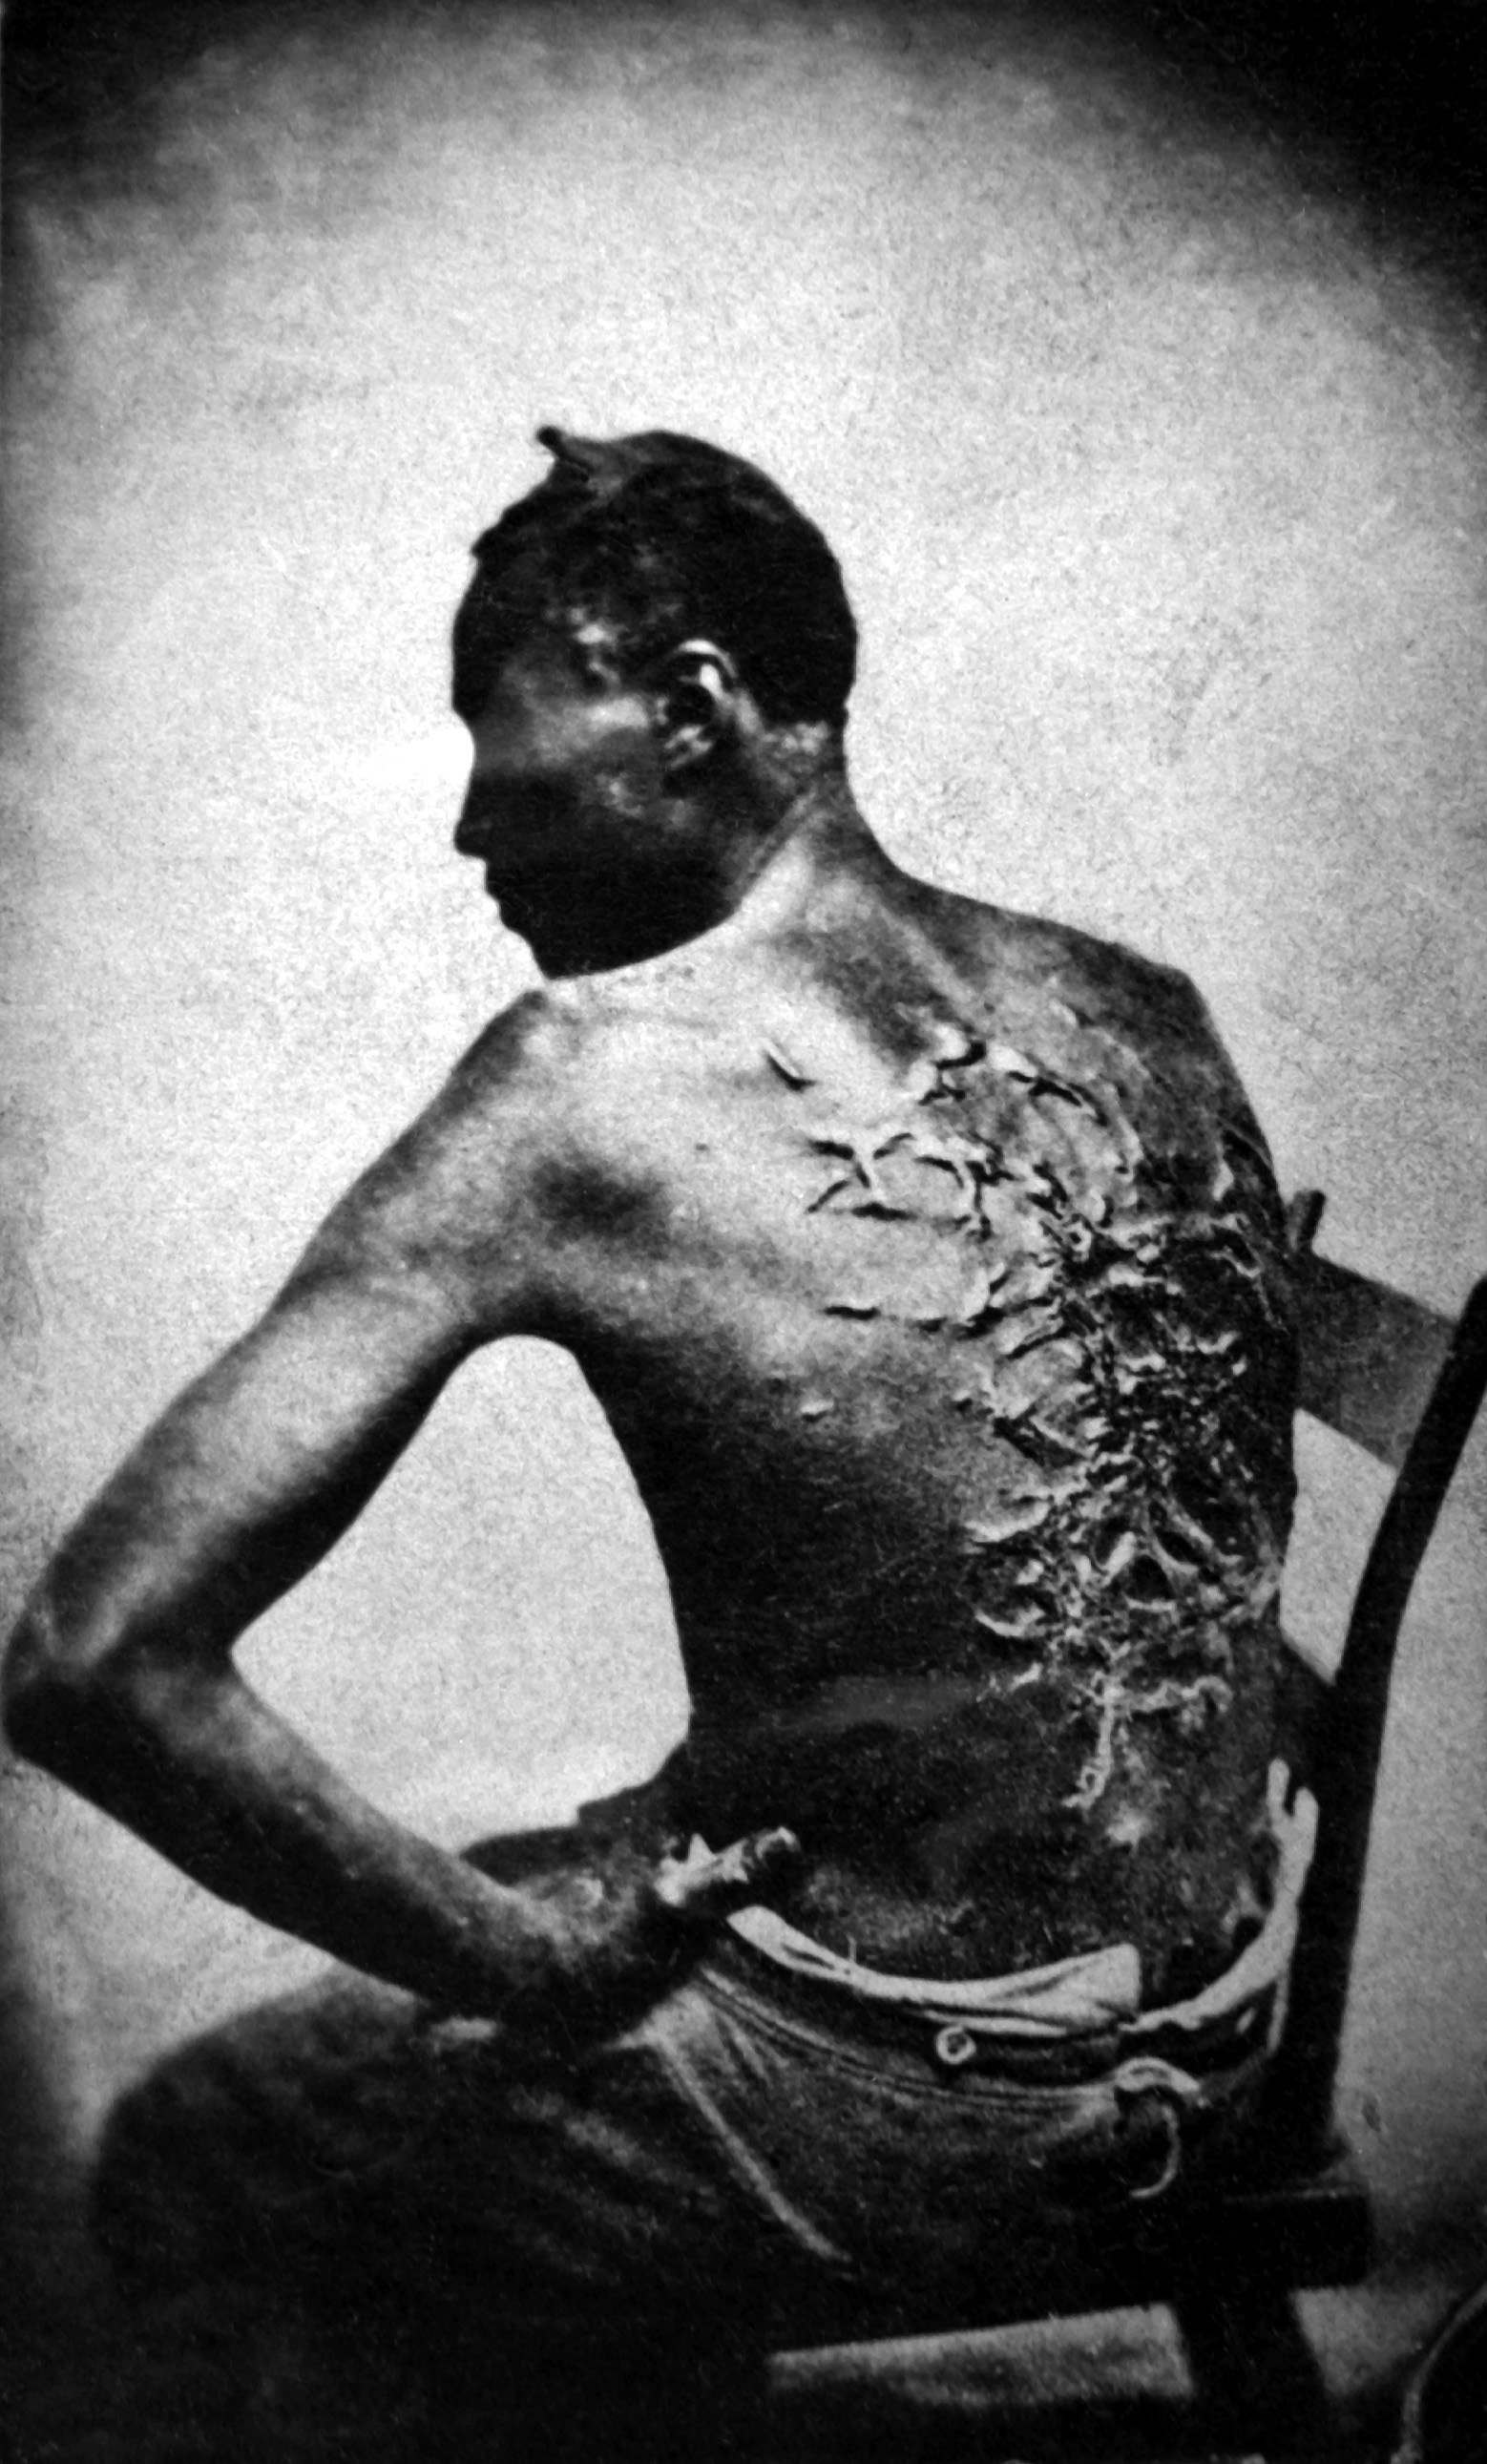 Scars of a whipped slave April 2, 1863, Baton Rouge, Louisiana